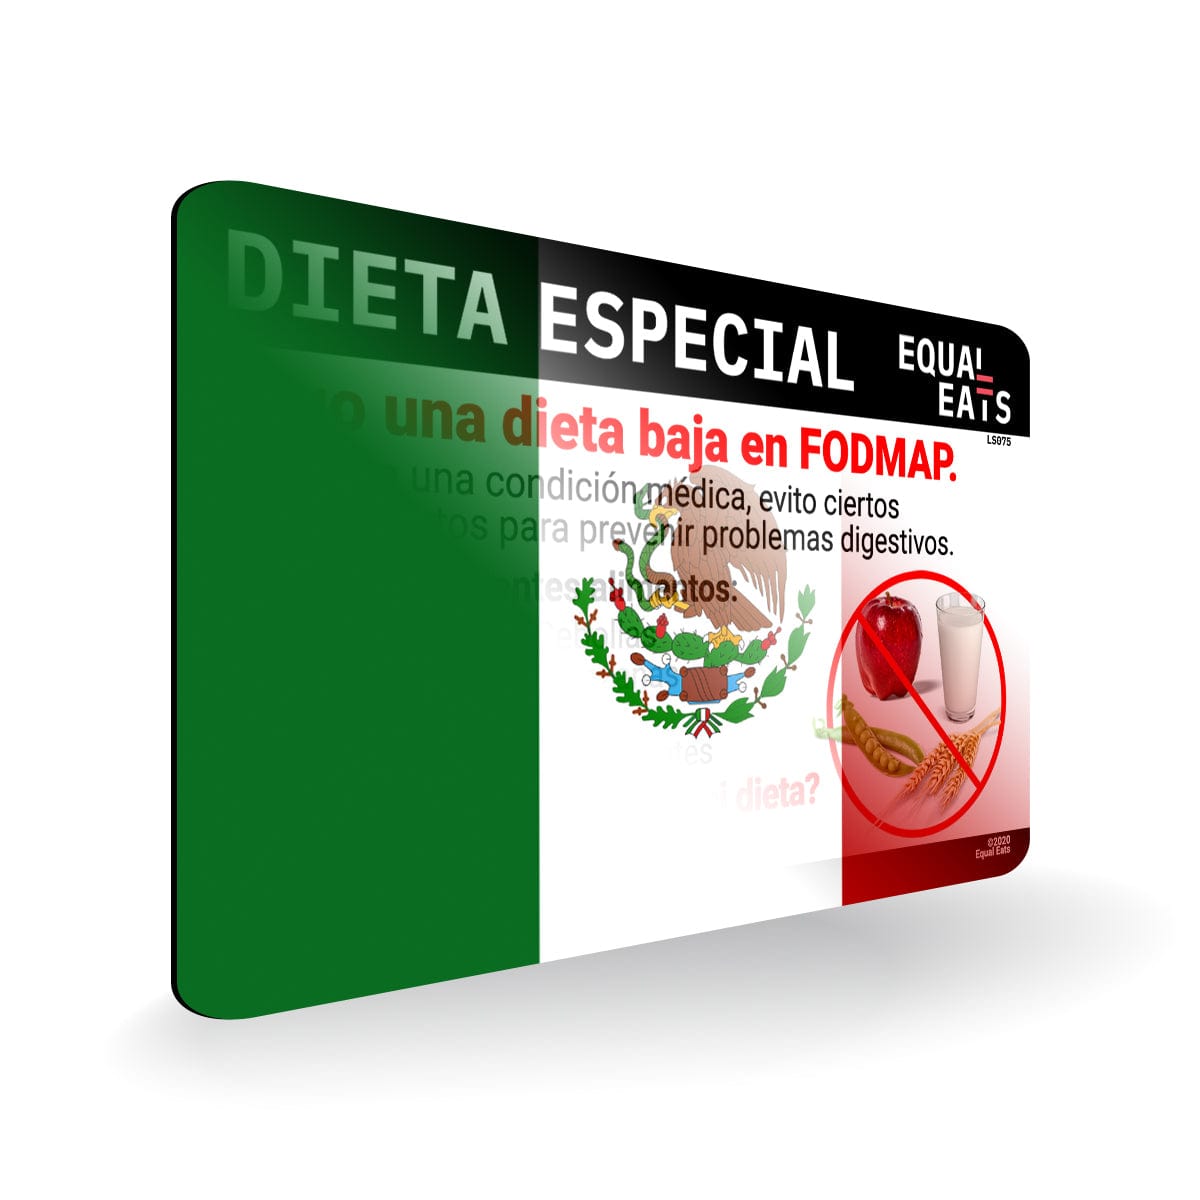 Low FODMAP Diet in Spanish. Low FODMAP Diet Card for Latin America